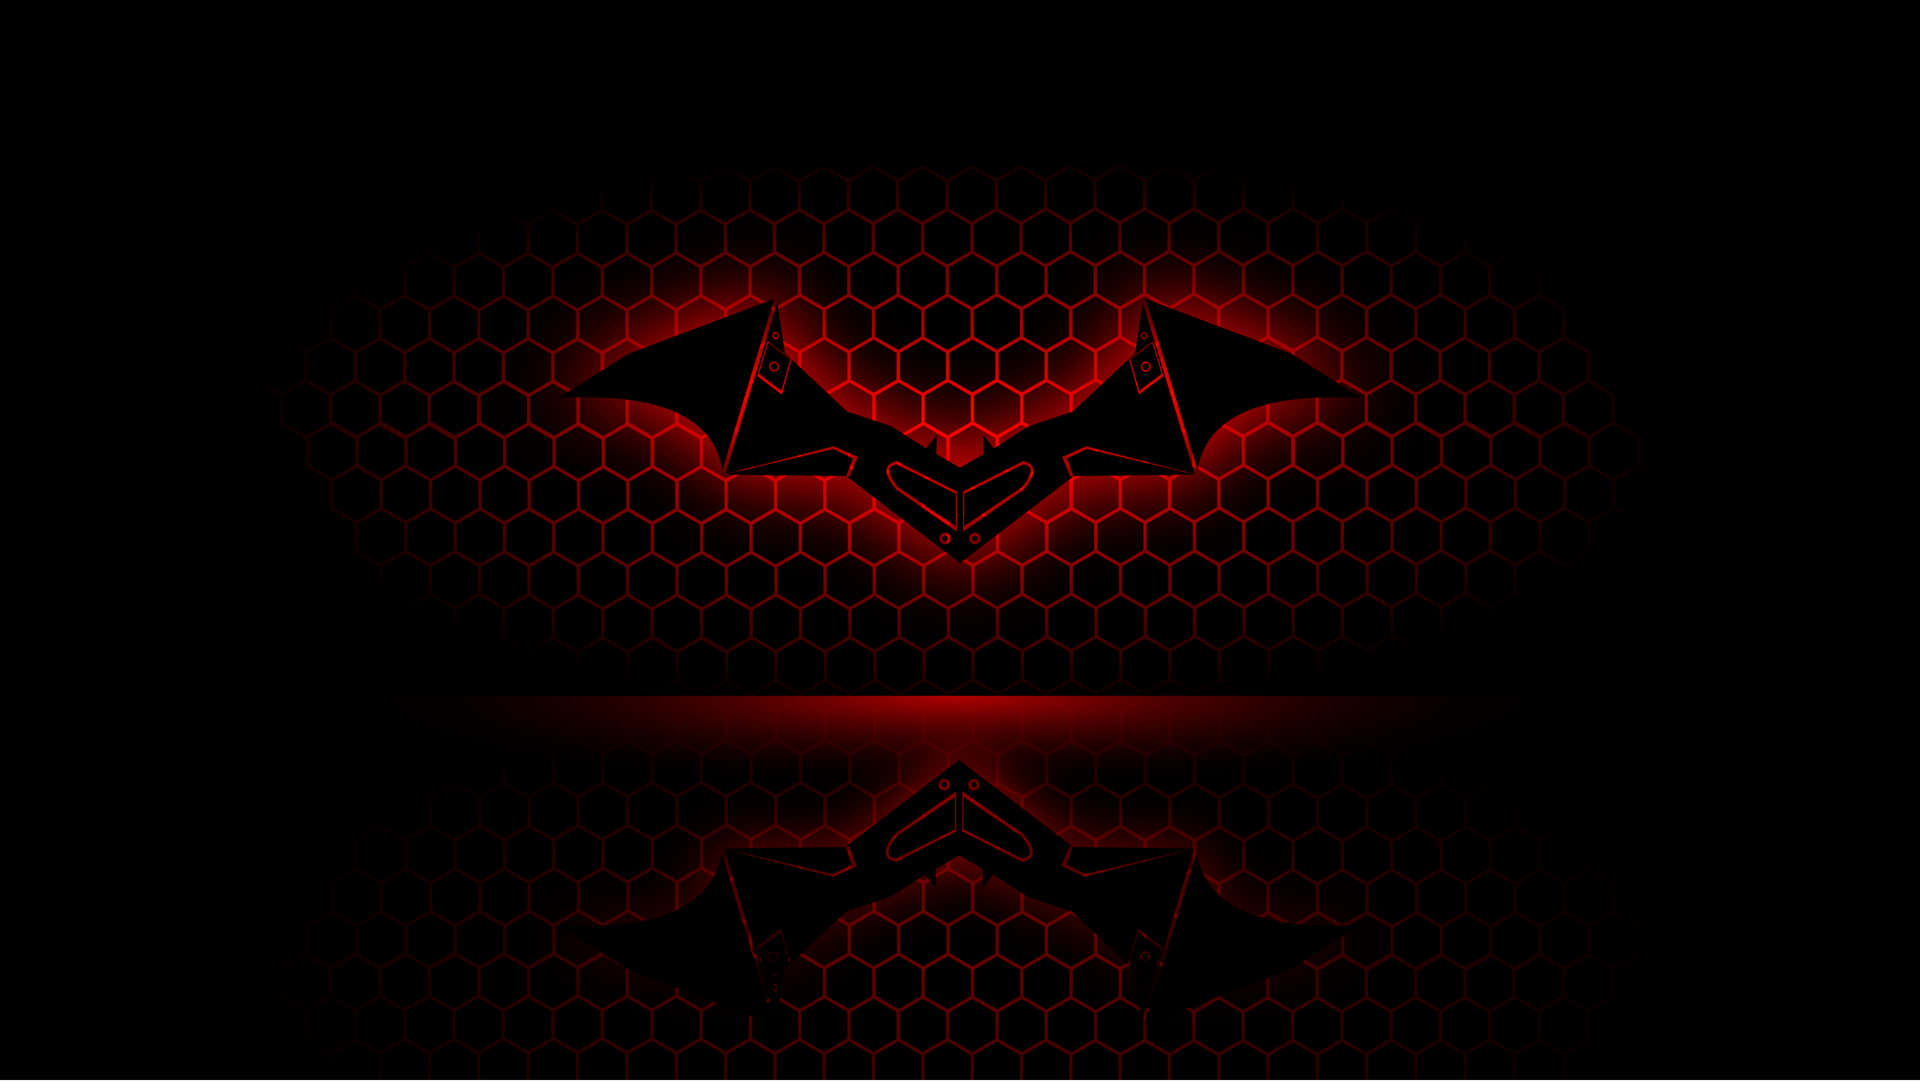 Bright Red Batman Logo in High-Definition Wallpaper